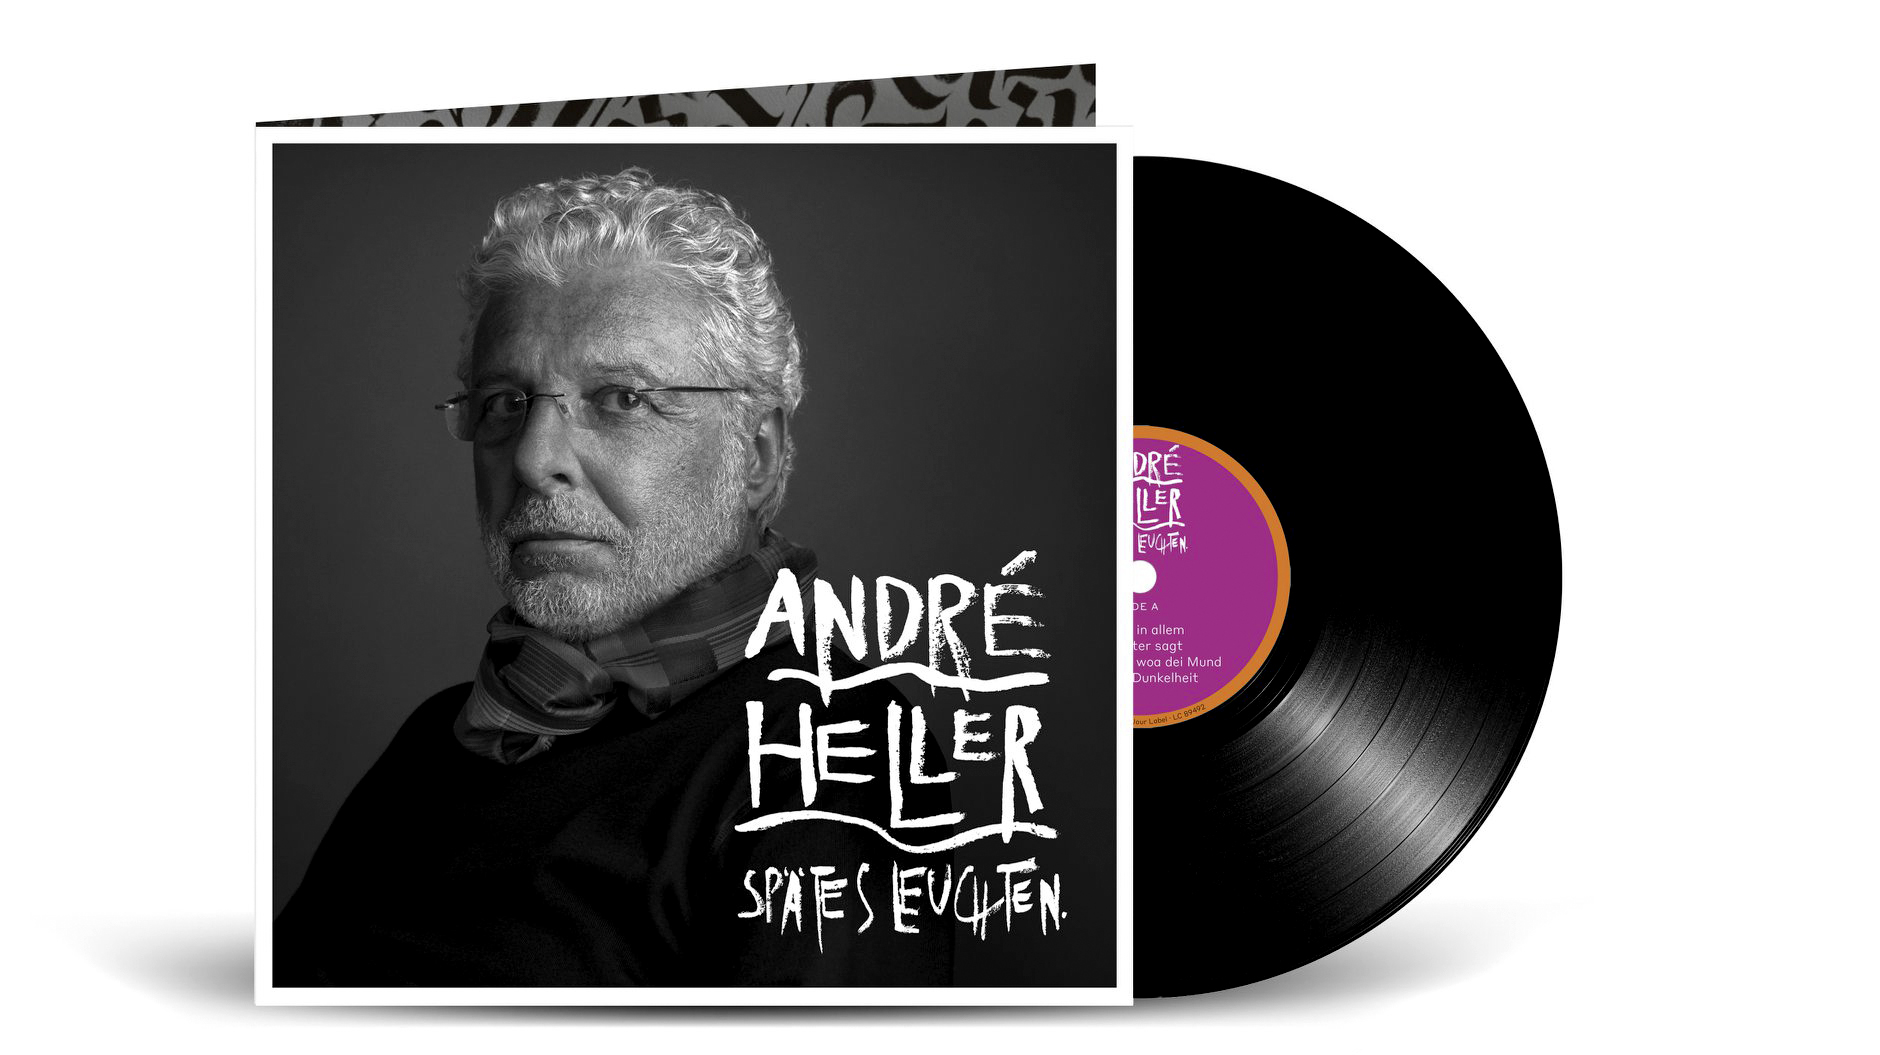 ANDRÉ HELLER PORTRAIT FOR HIS NEW ALBUM COVER